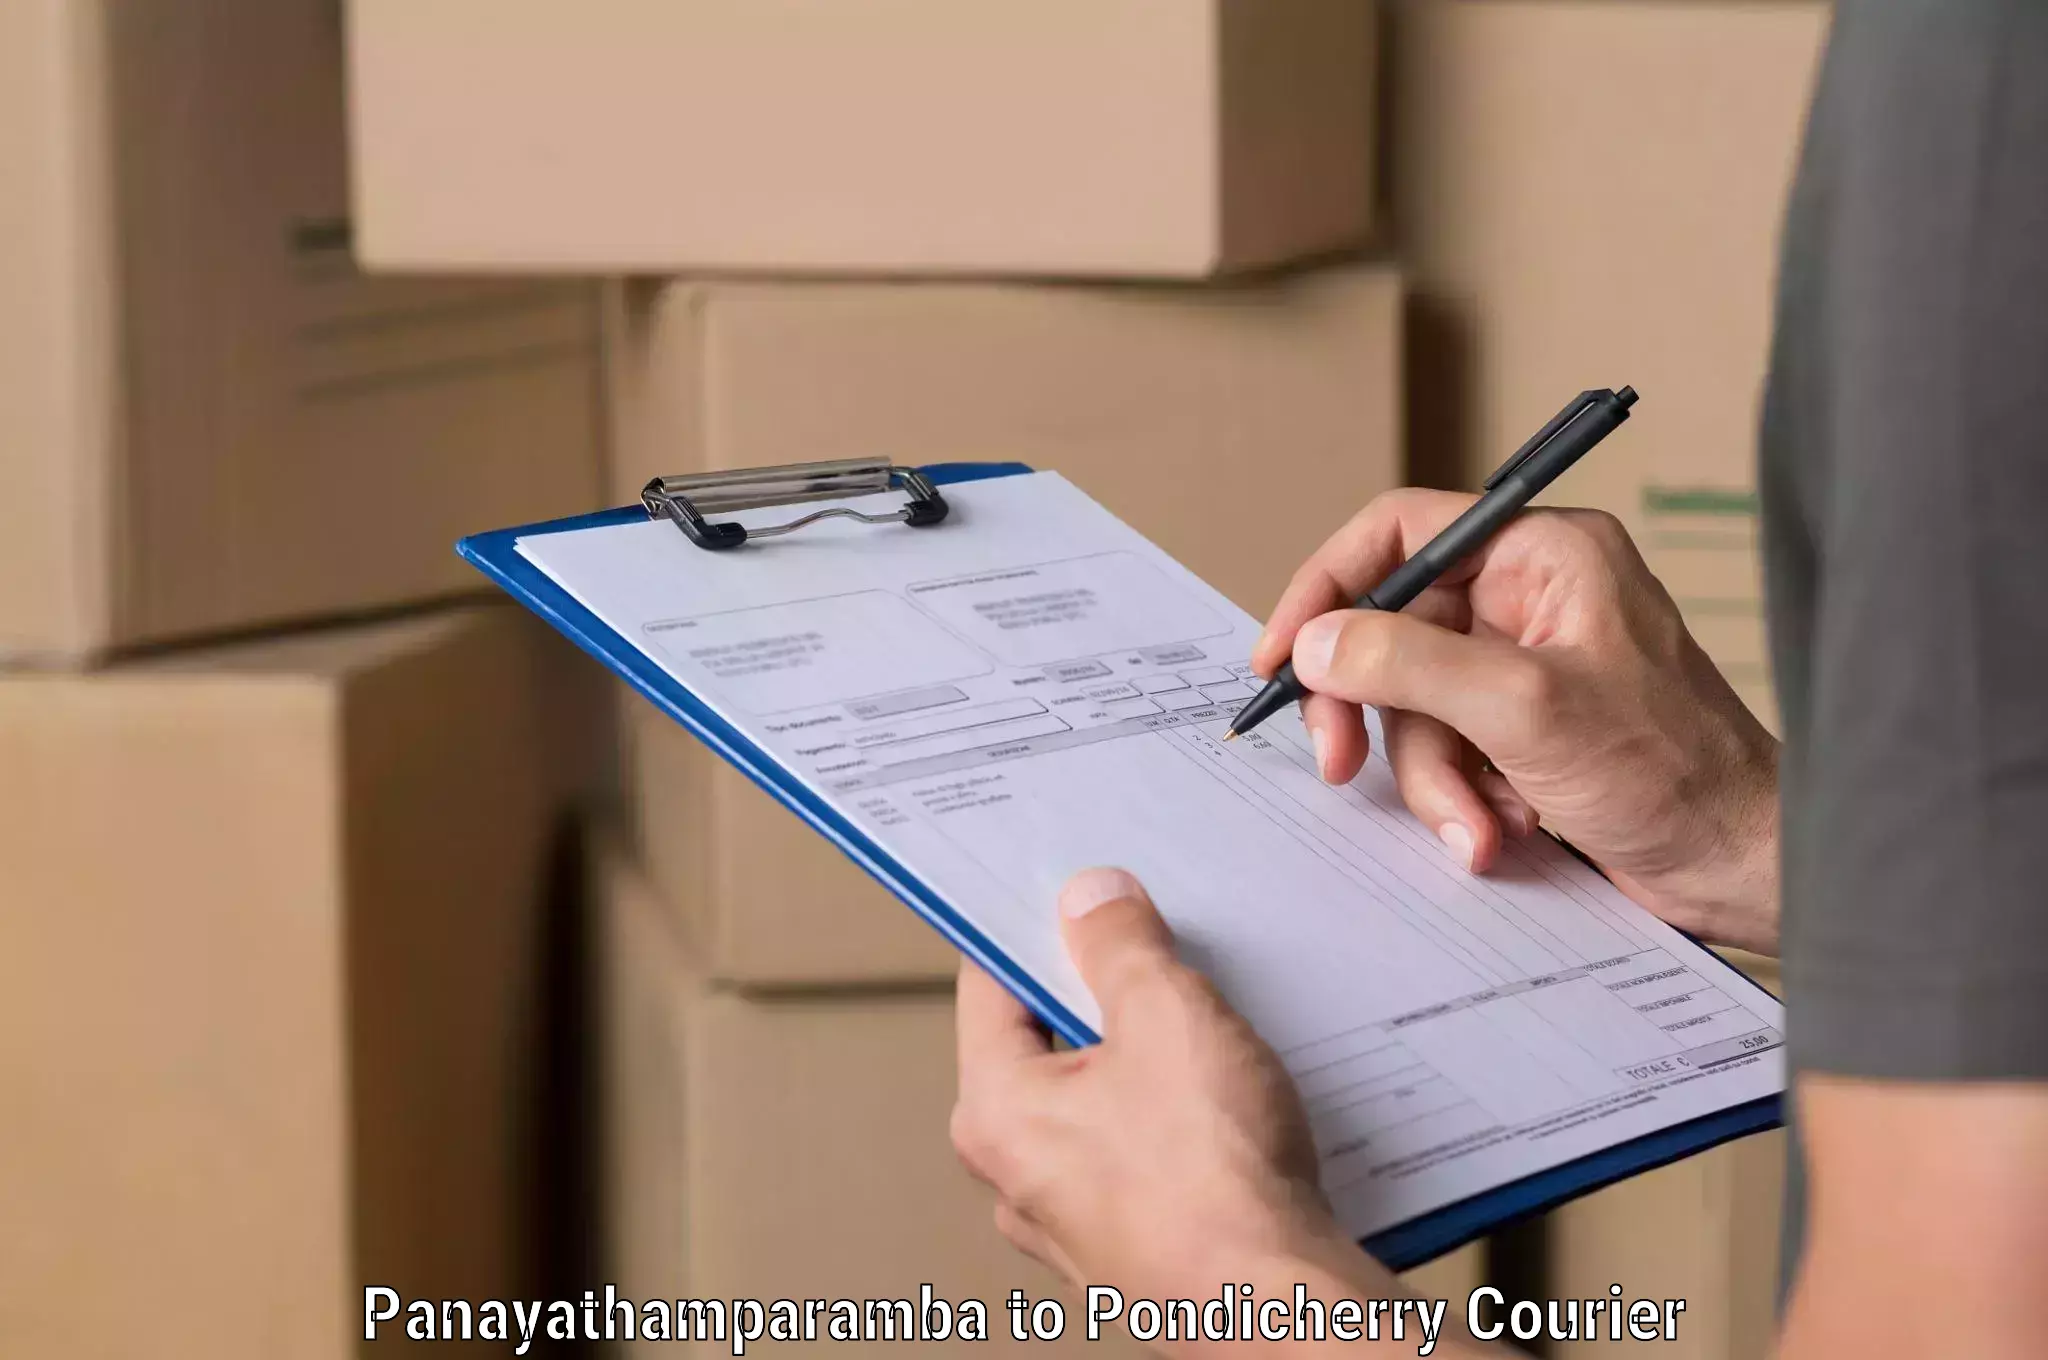 Diverse delivery methods Panayathamparamba to Metttupalayam